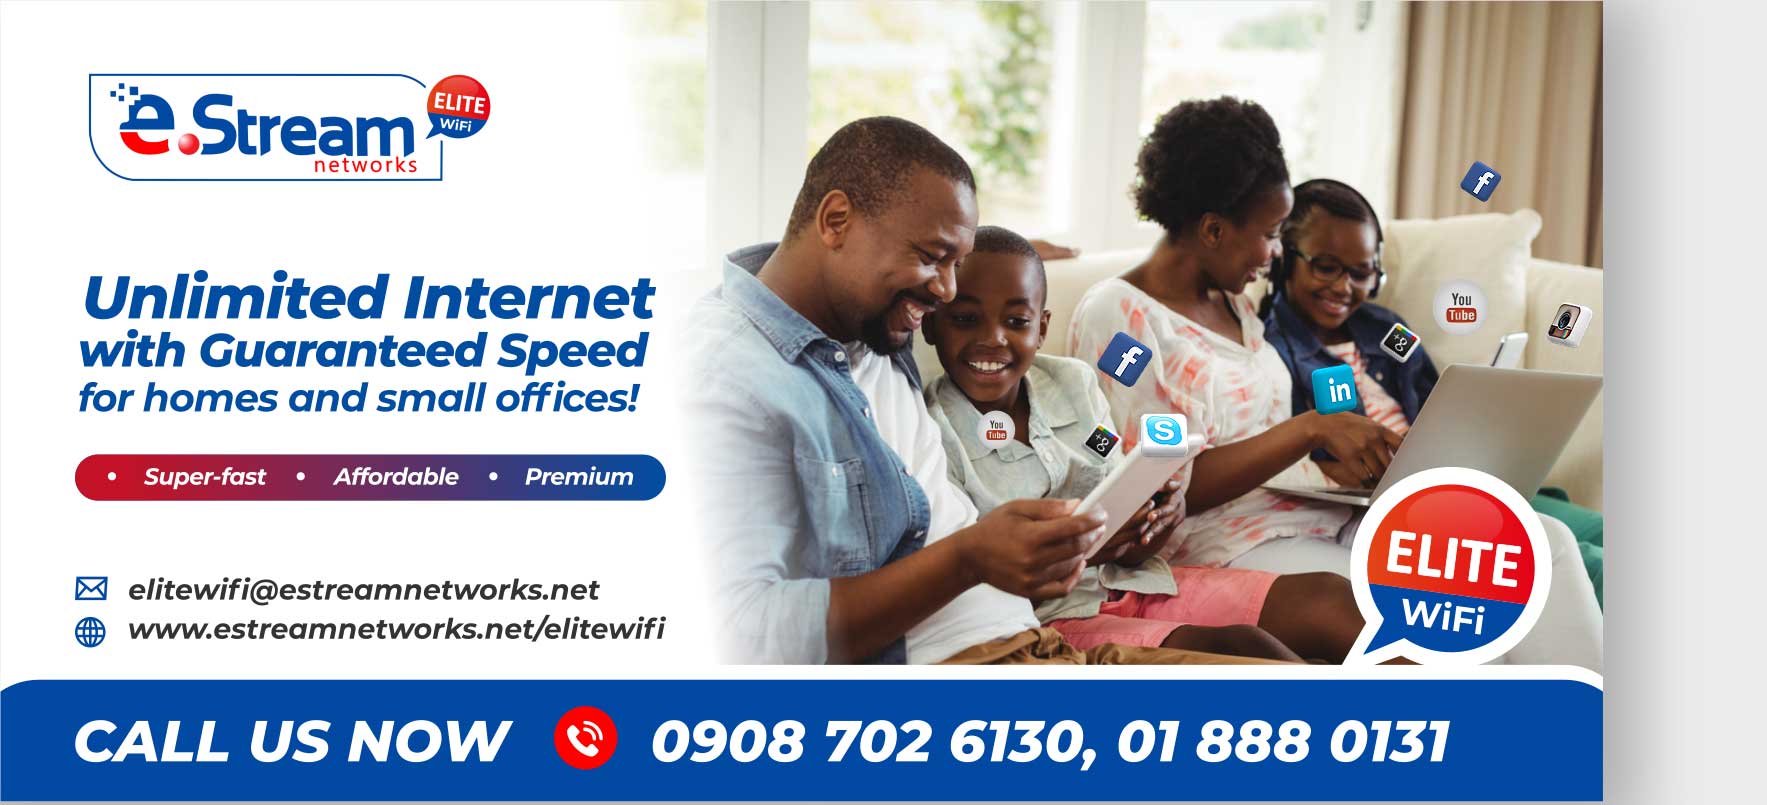 elitewifi-unlimited-internet-in-Nigeria